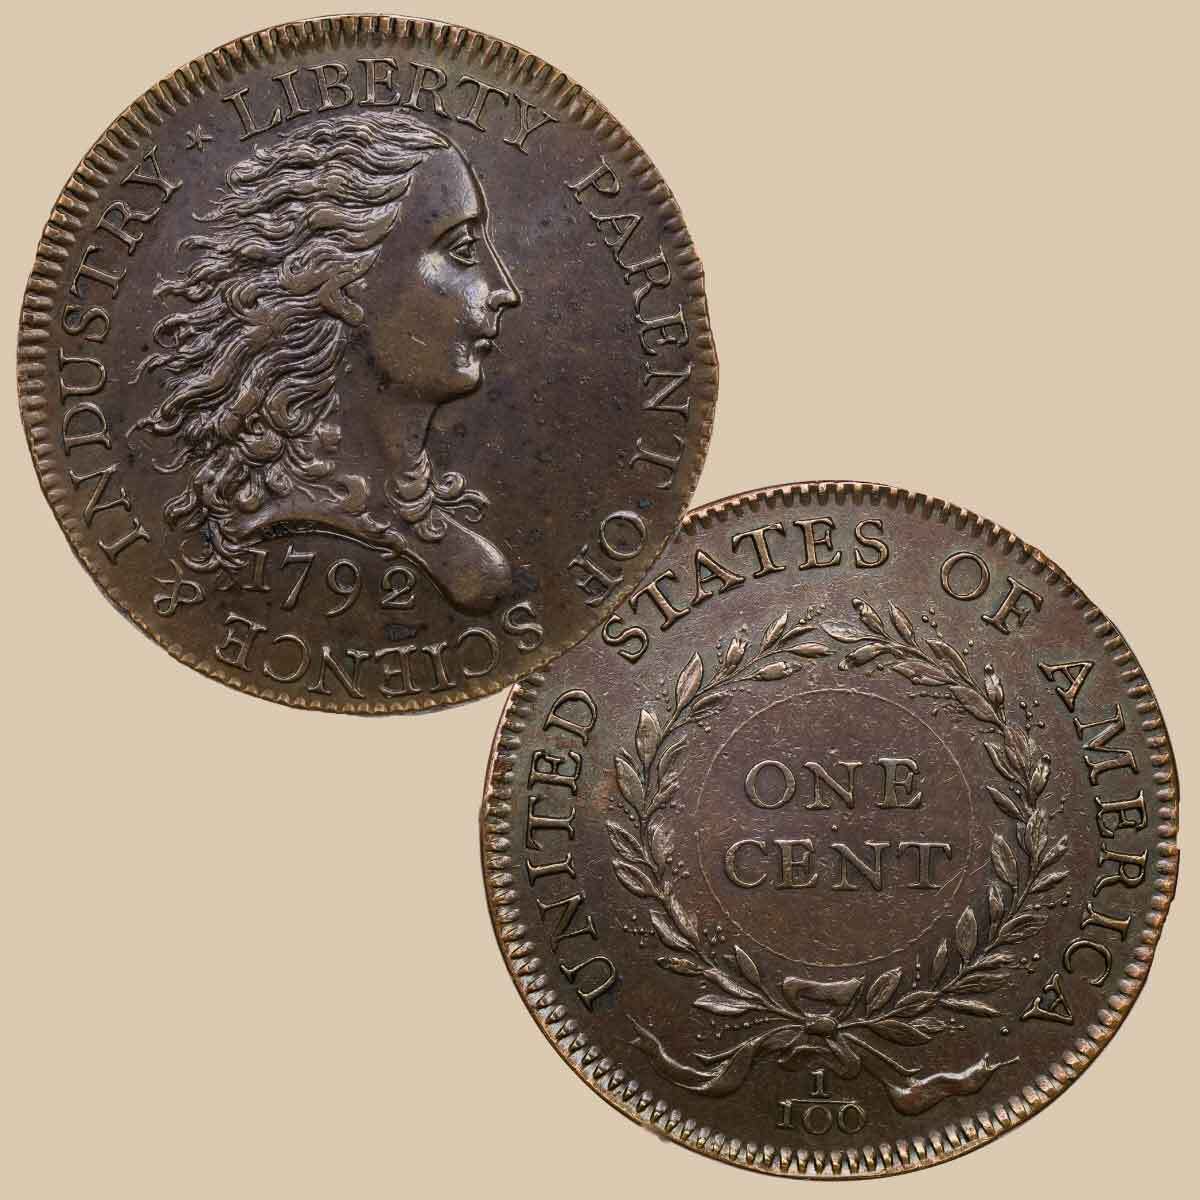 The 1792 Birch Cent